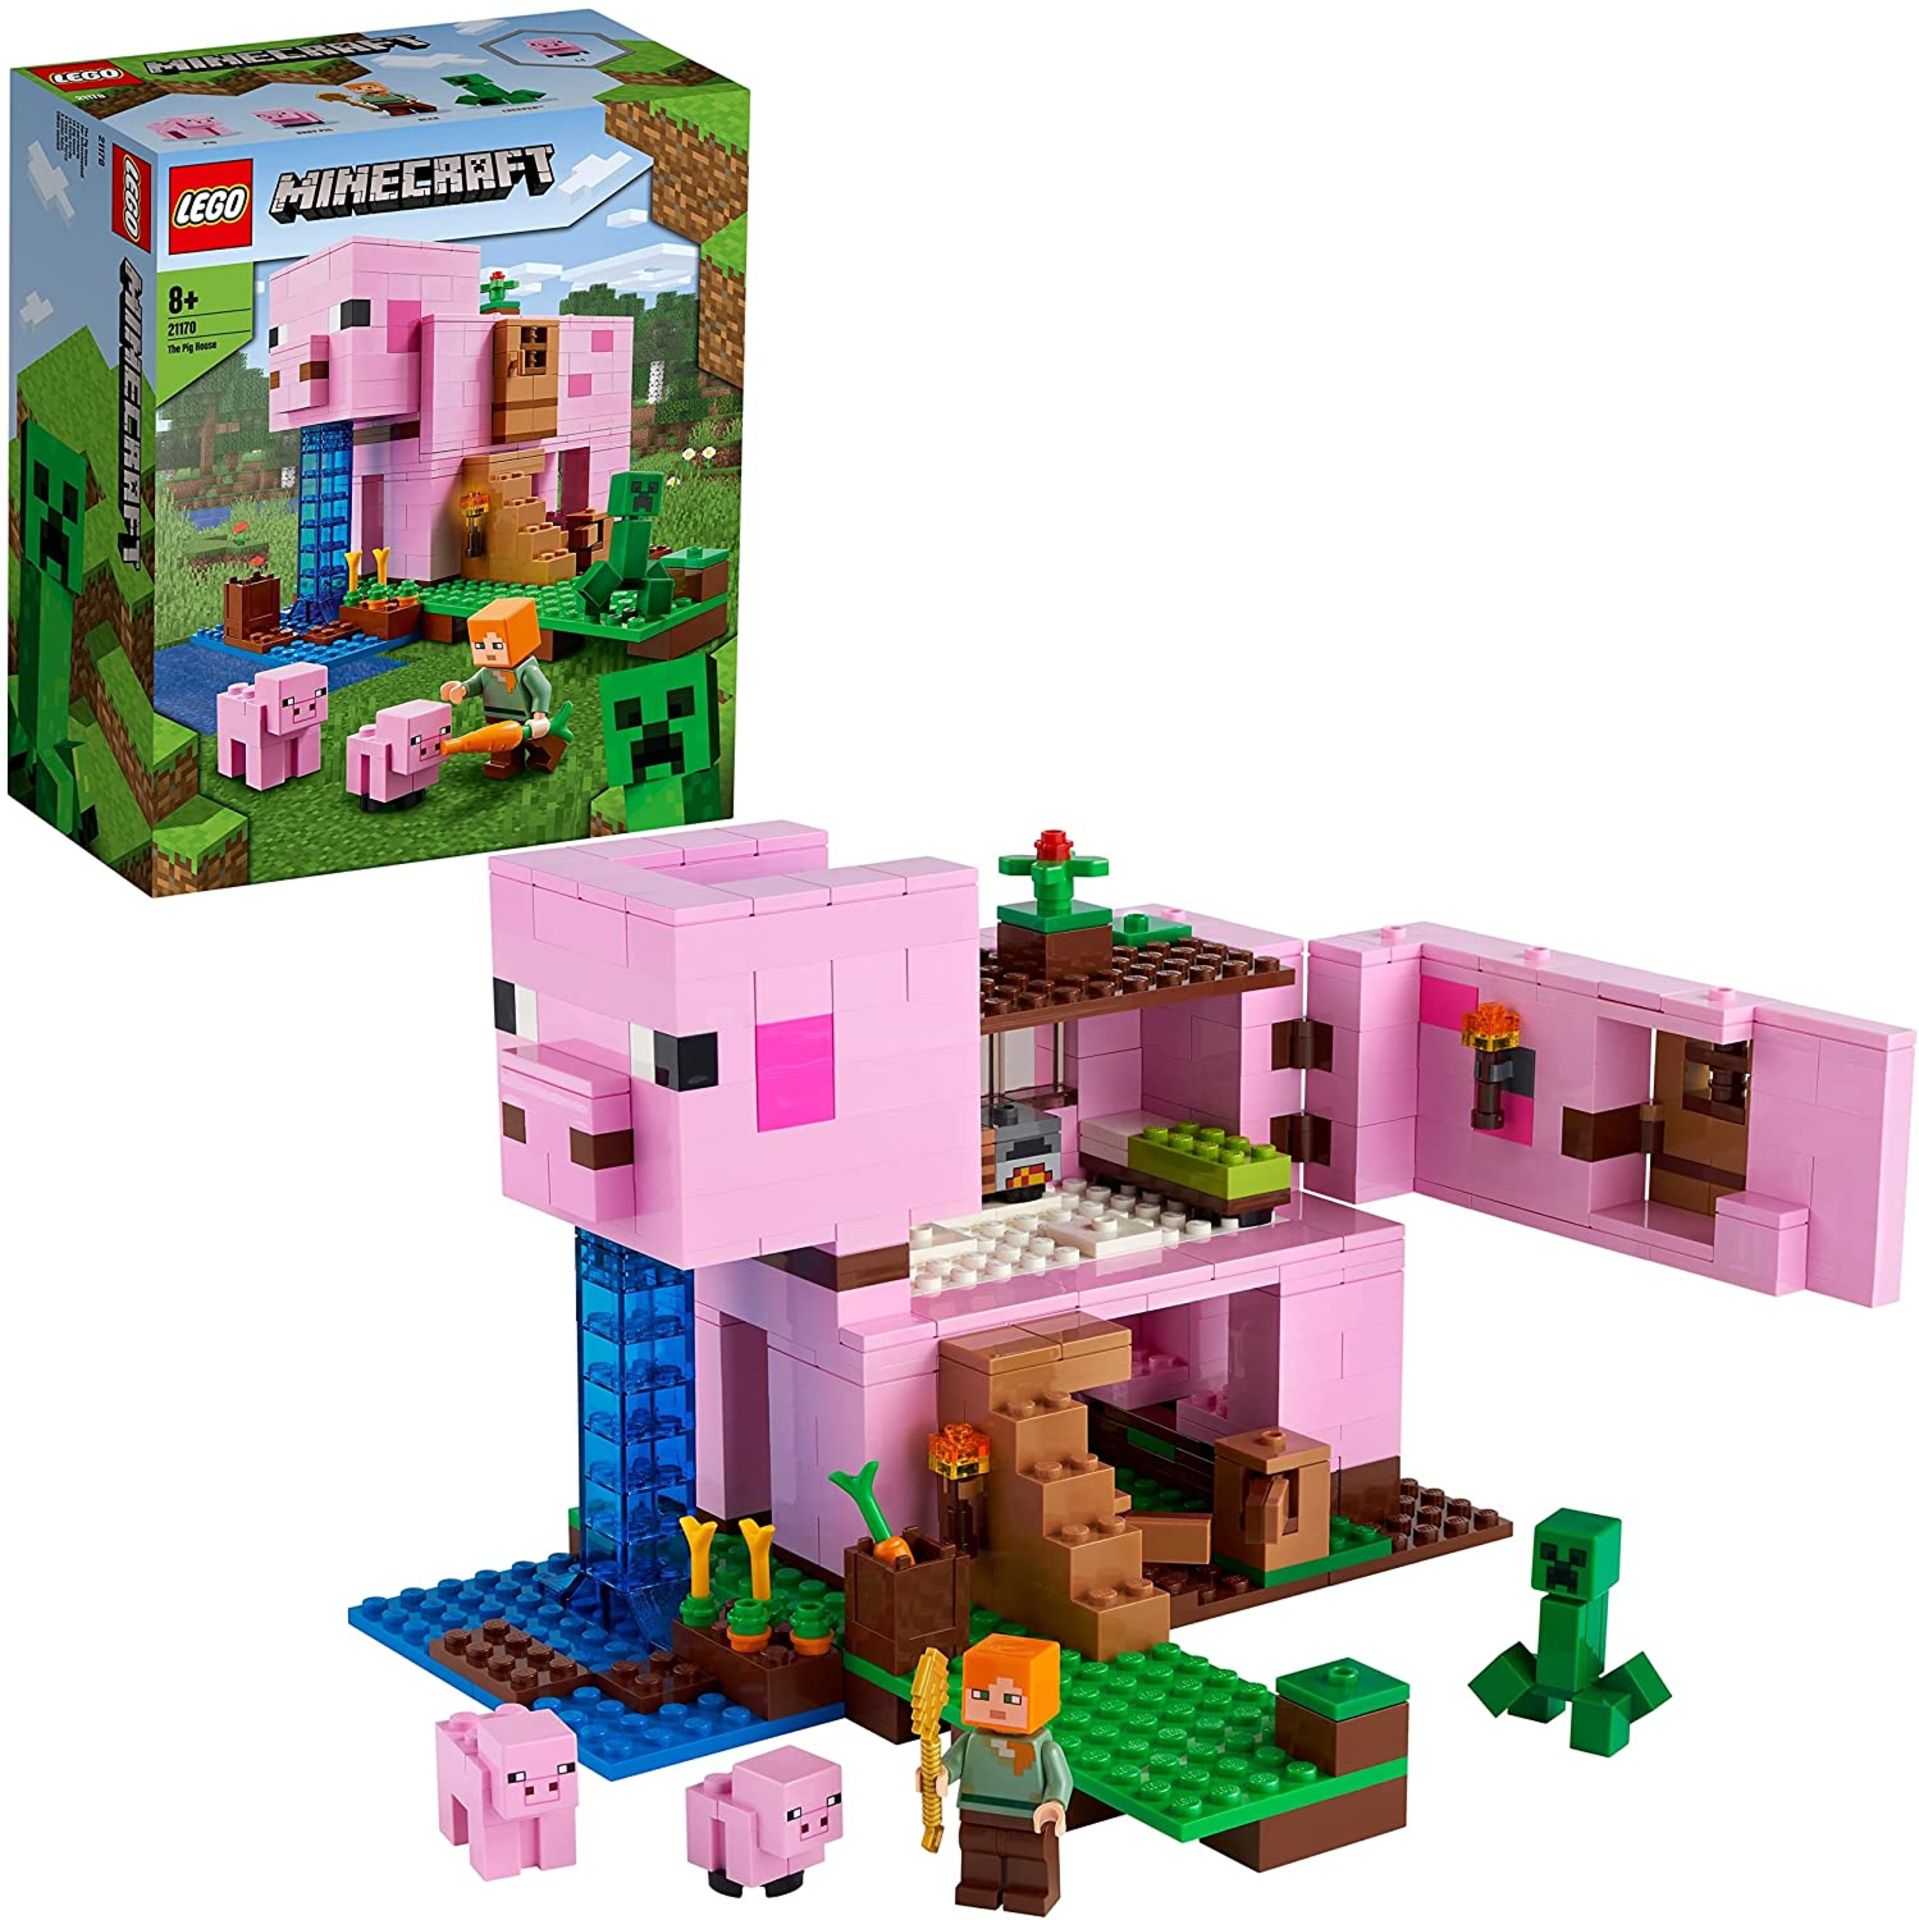 1 x Lego 21170 Minecraft The Pig House Building Set 21170 - Brand New - CL011 - Ref: HRX123  -